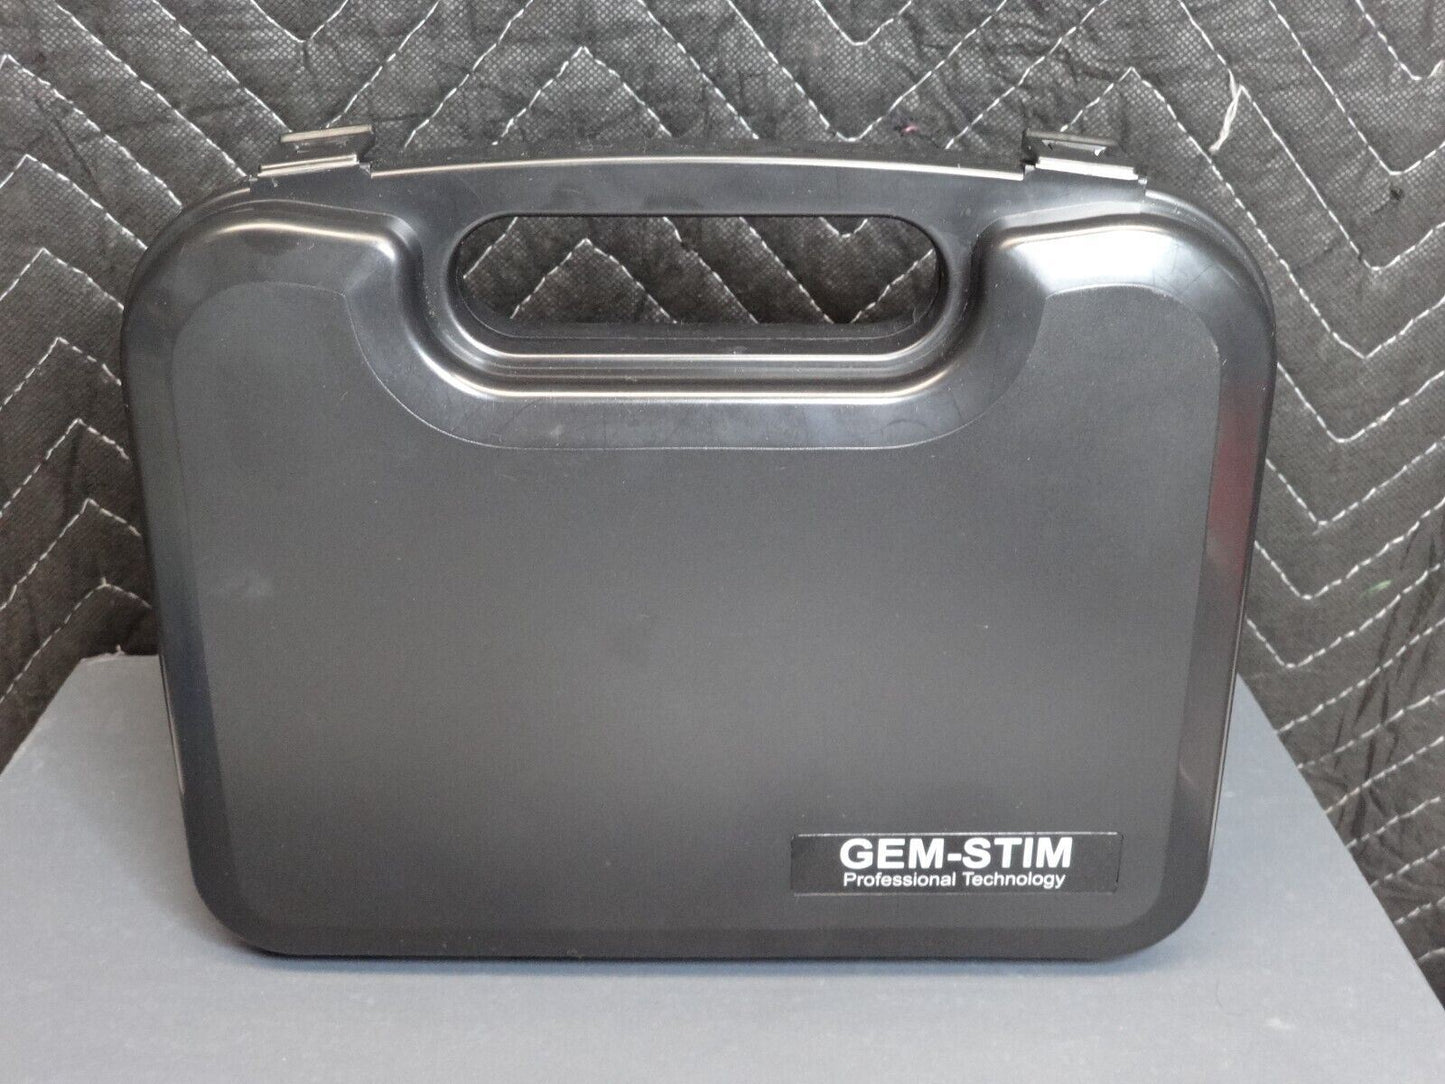 Gem-Stim GM3A50T Transcutaneous Electrical Nerve Stimulator w/ New Electrodes